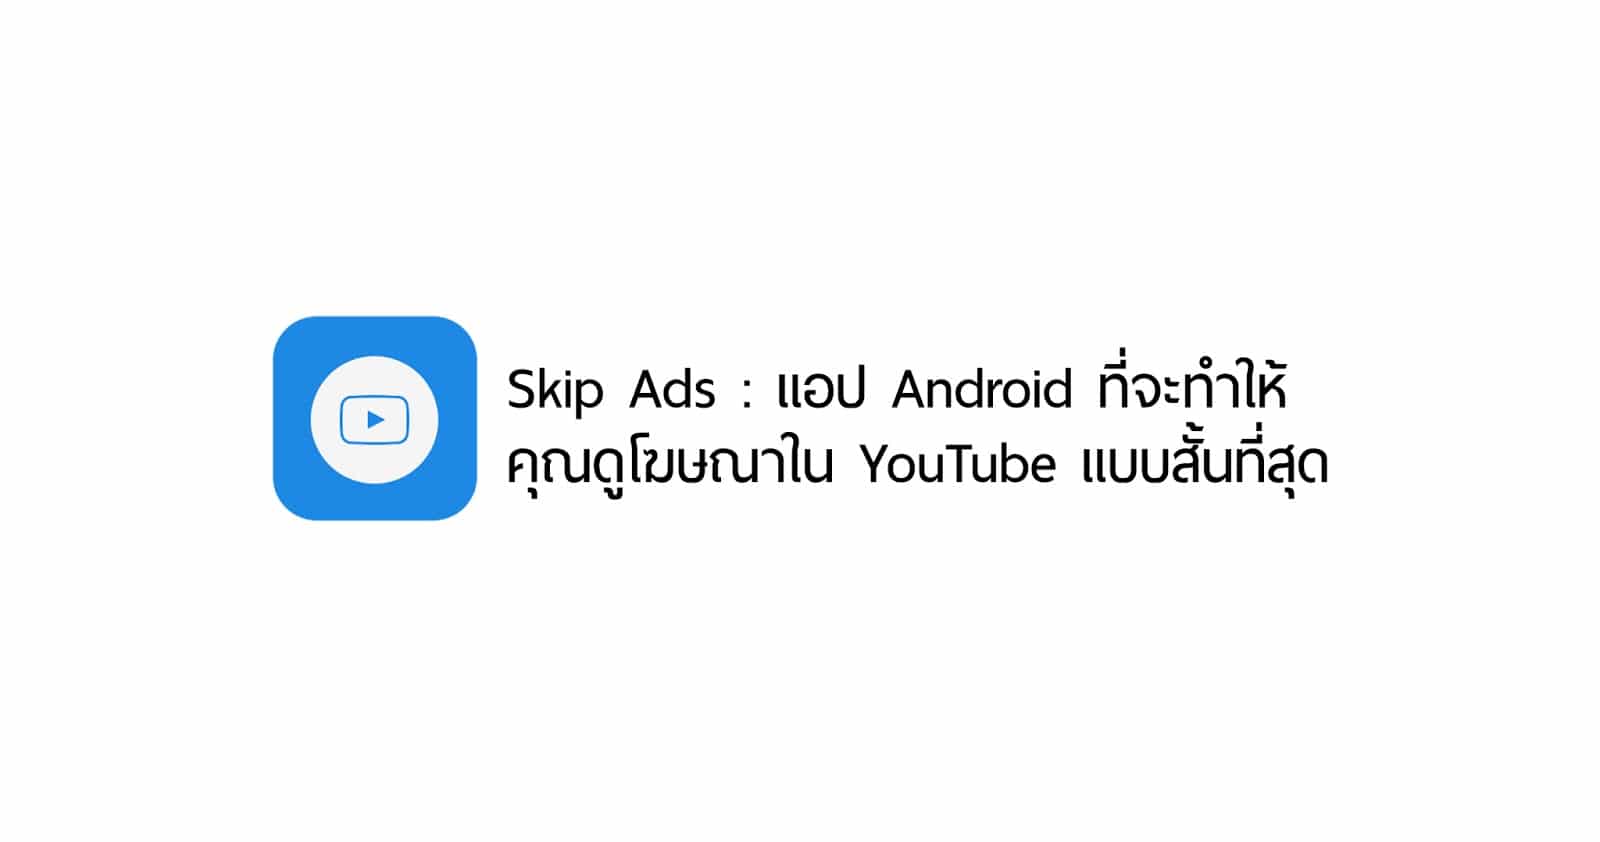 Skip Ads : แอป Android ที่จะทำให้คุณดูโฆษณาใน YouTube แบบสั้นที่สุด 1